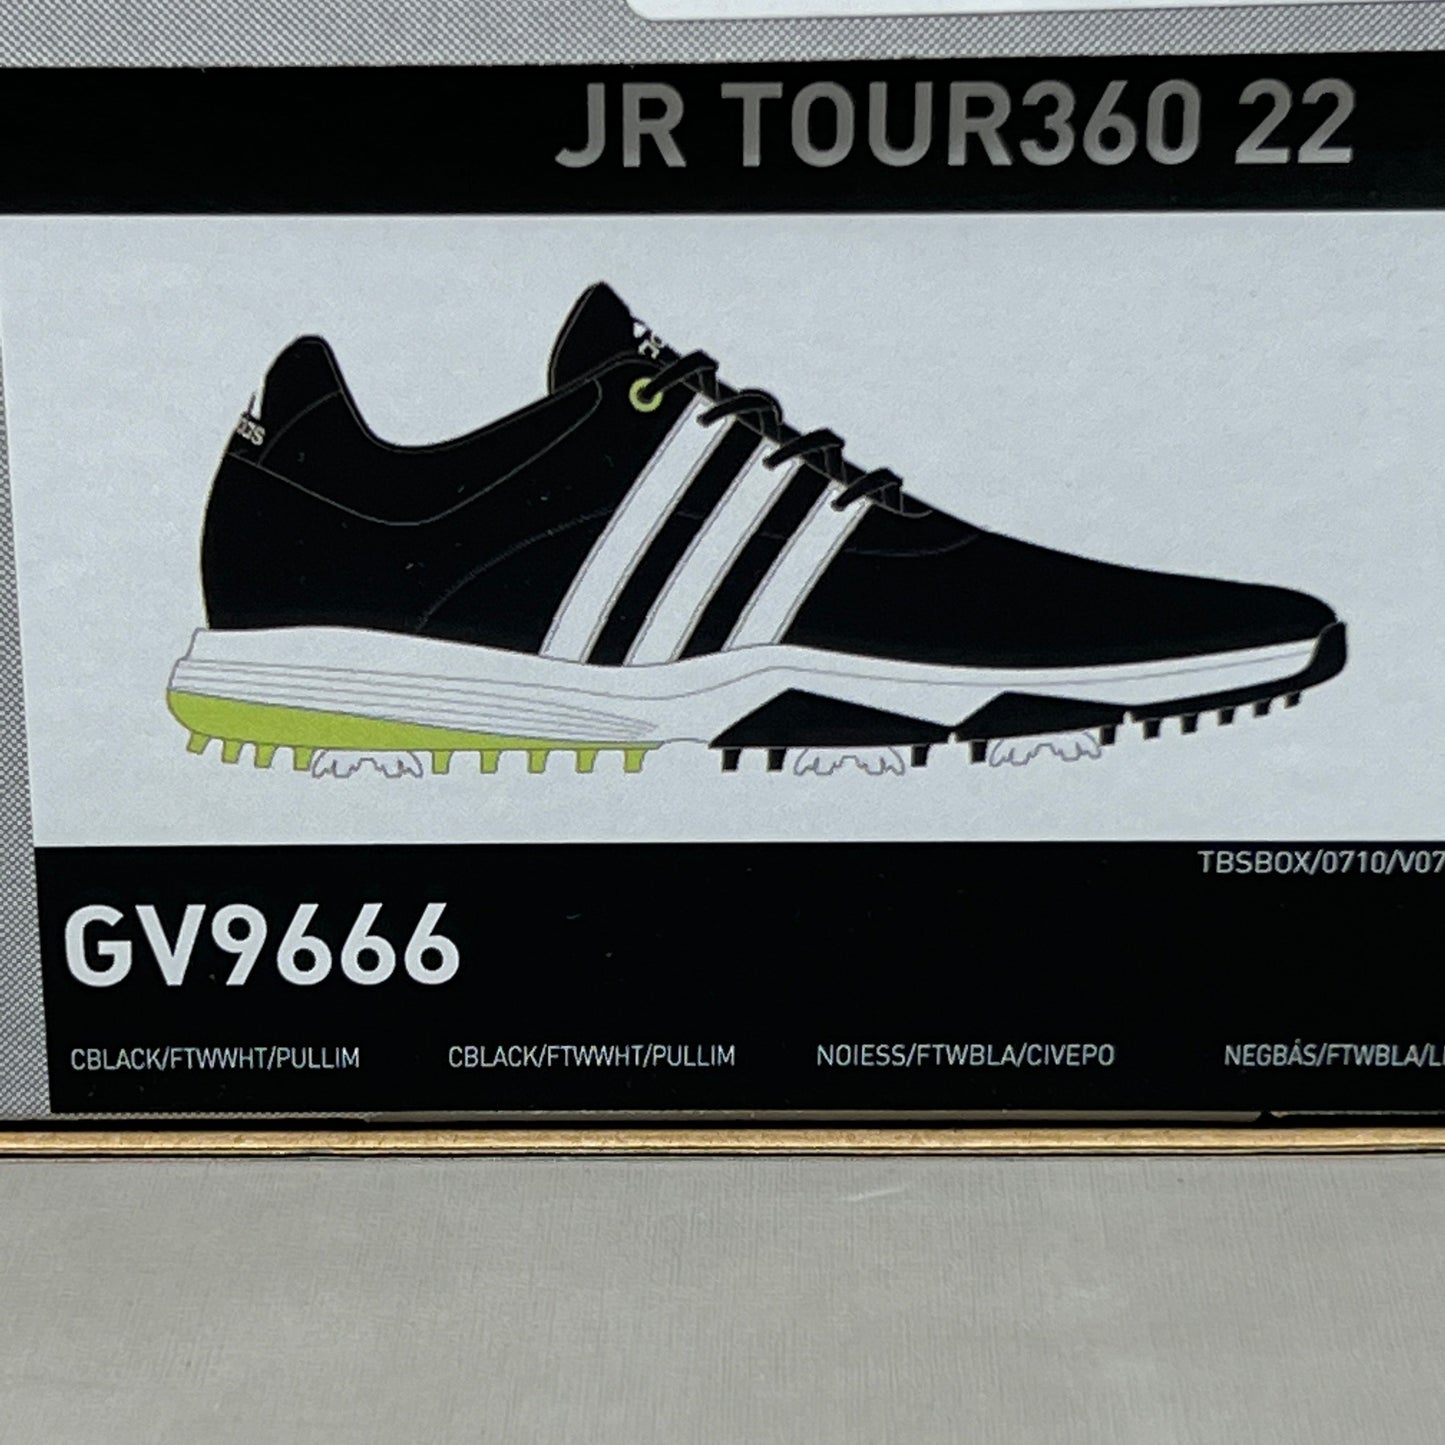 ADIDAS Golf Shoes JR Tour360 22 Youth Sz 3.5 Black / White / Lime GV9666 (New)